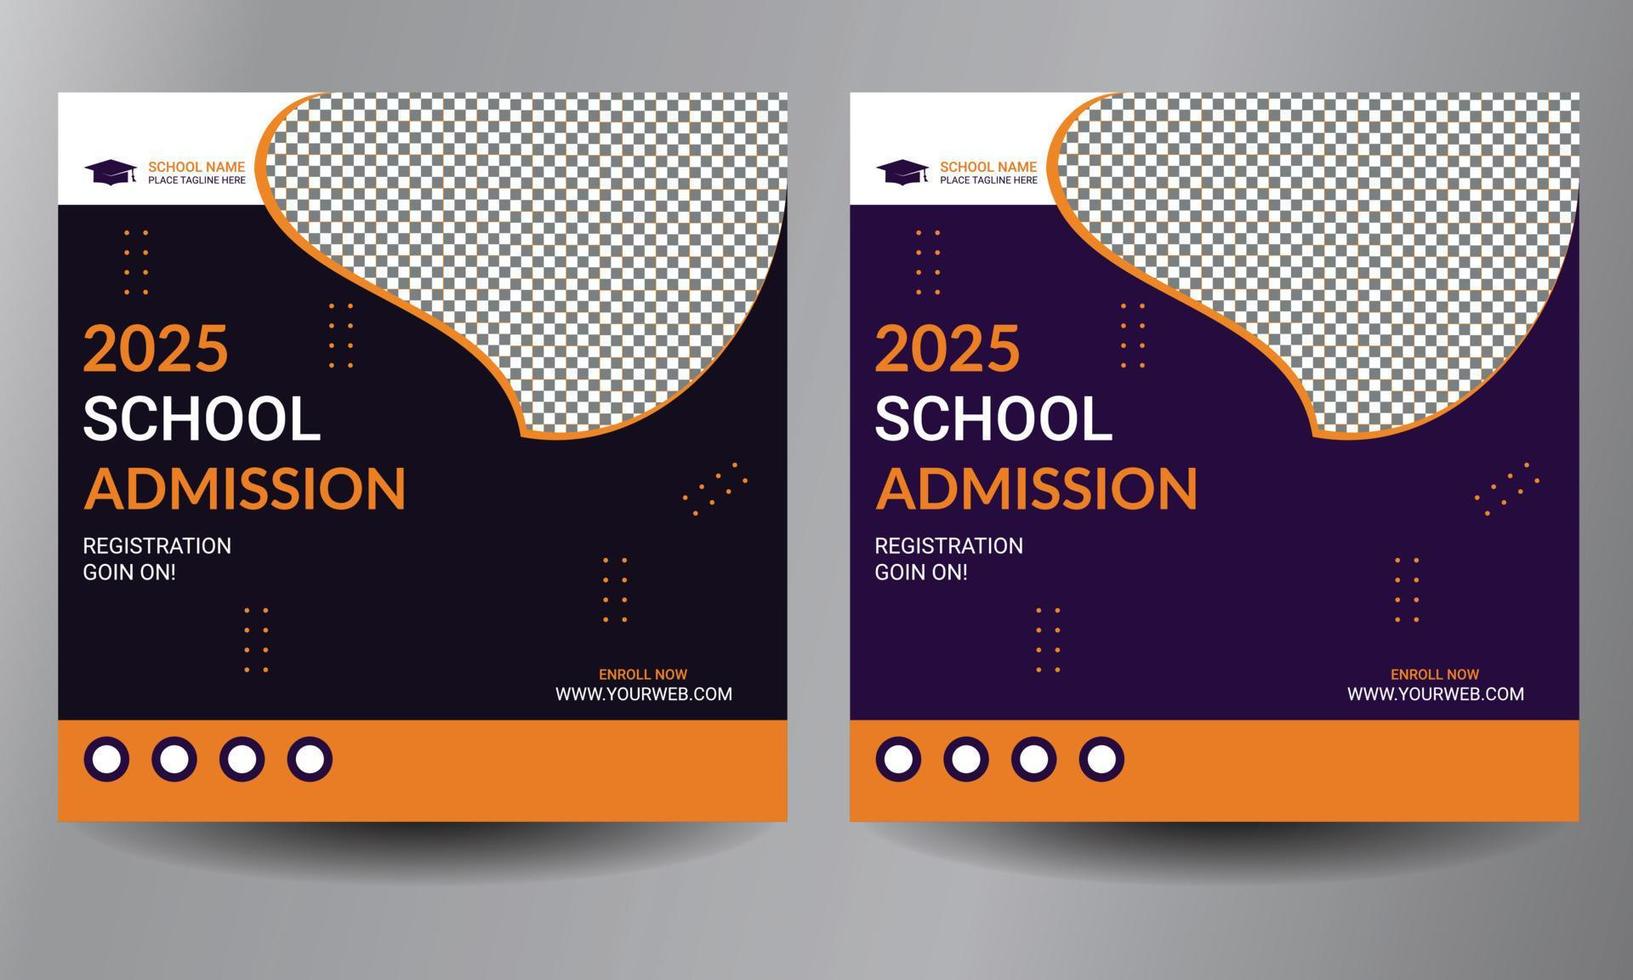 School admission social media post or web banner design. Suitable for junior and senior high school promotional banner design template. vector